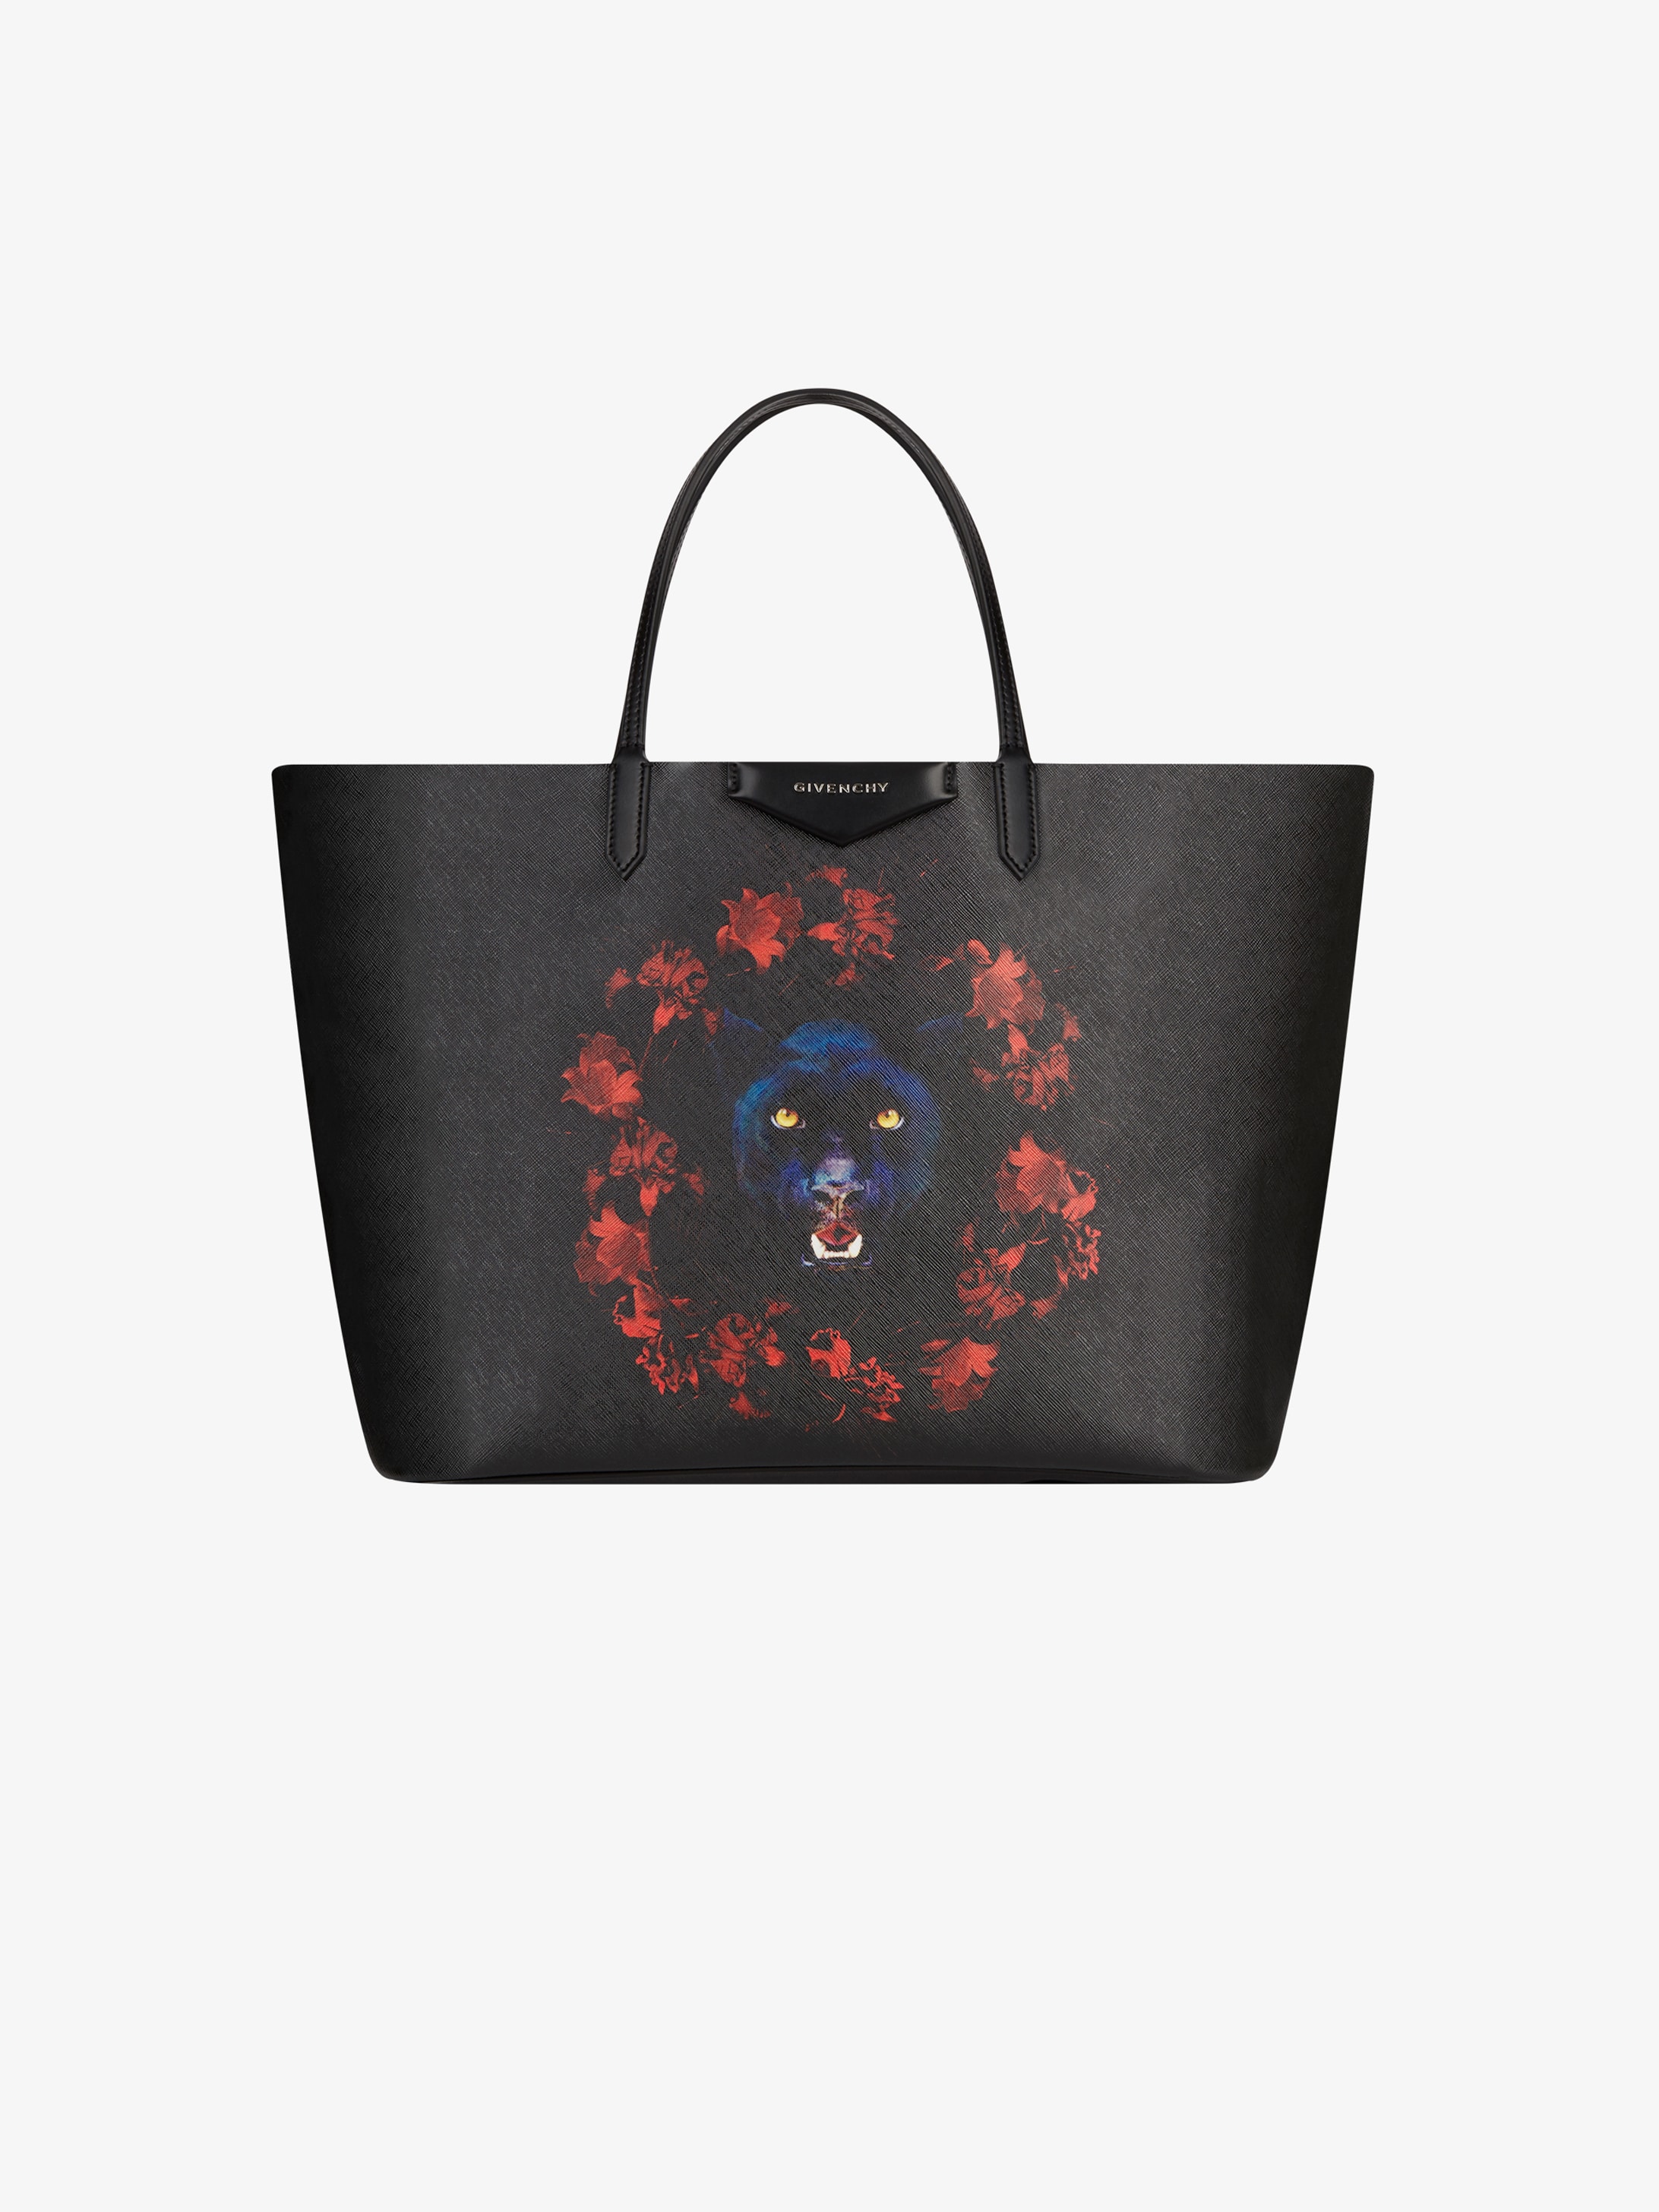 Givenchy Jaguar printed Antigona shopping bag | GIVENCHY Paris